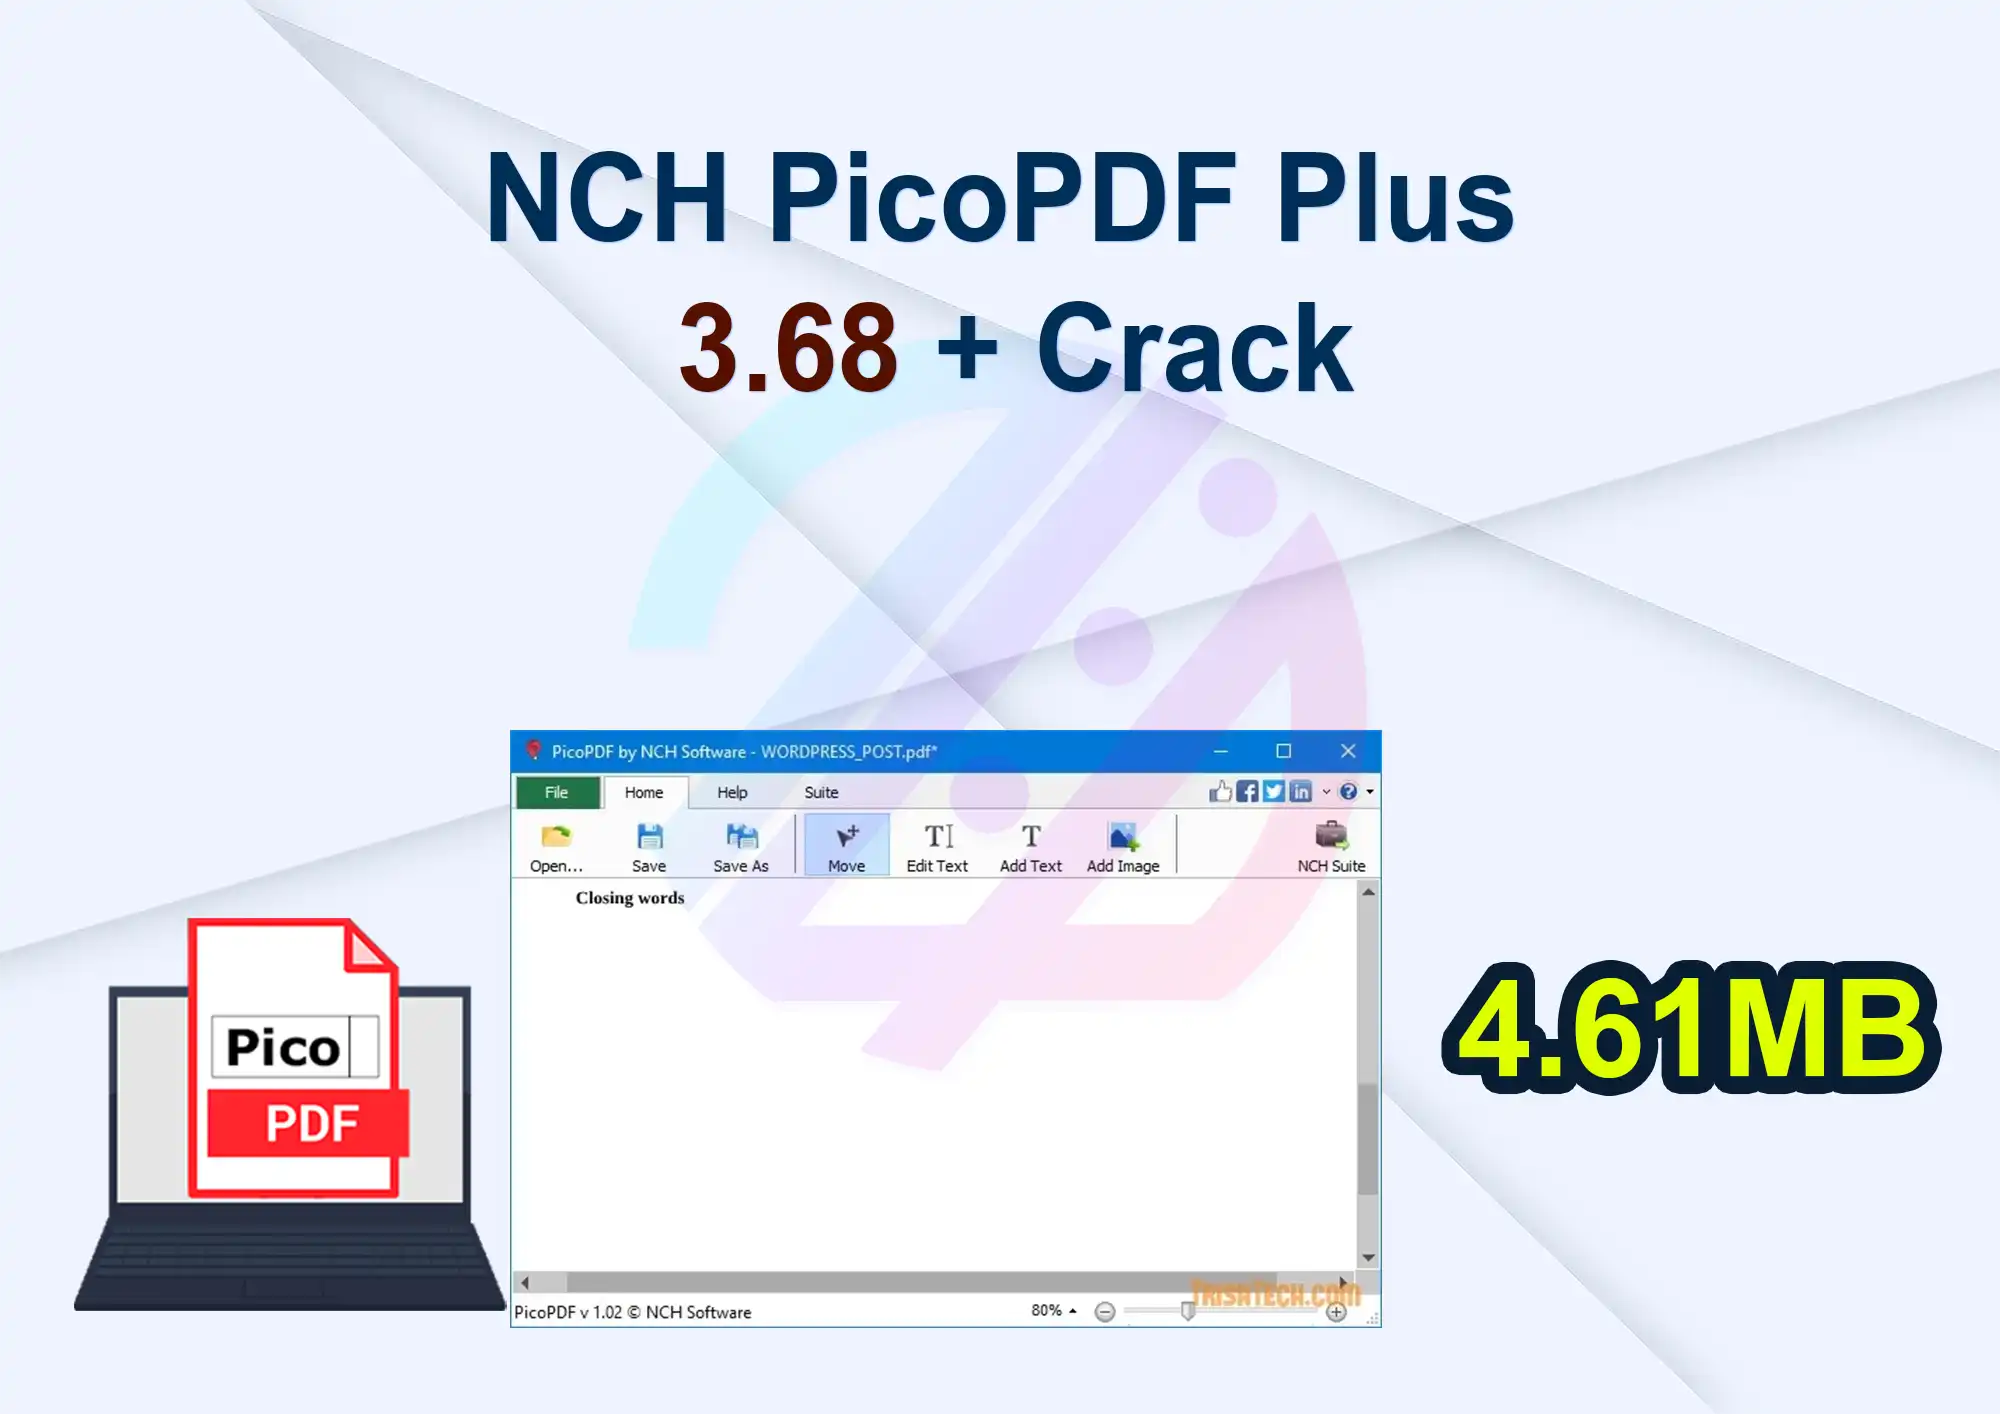 NCH PicoPDF Plus 3.68 + Crack